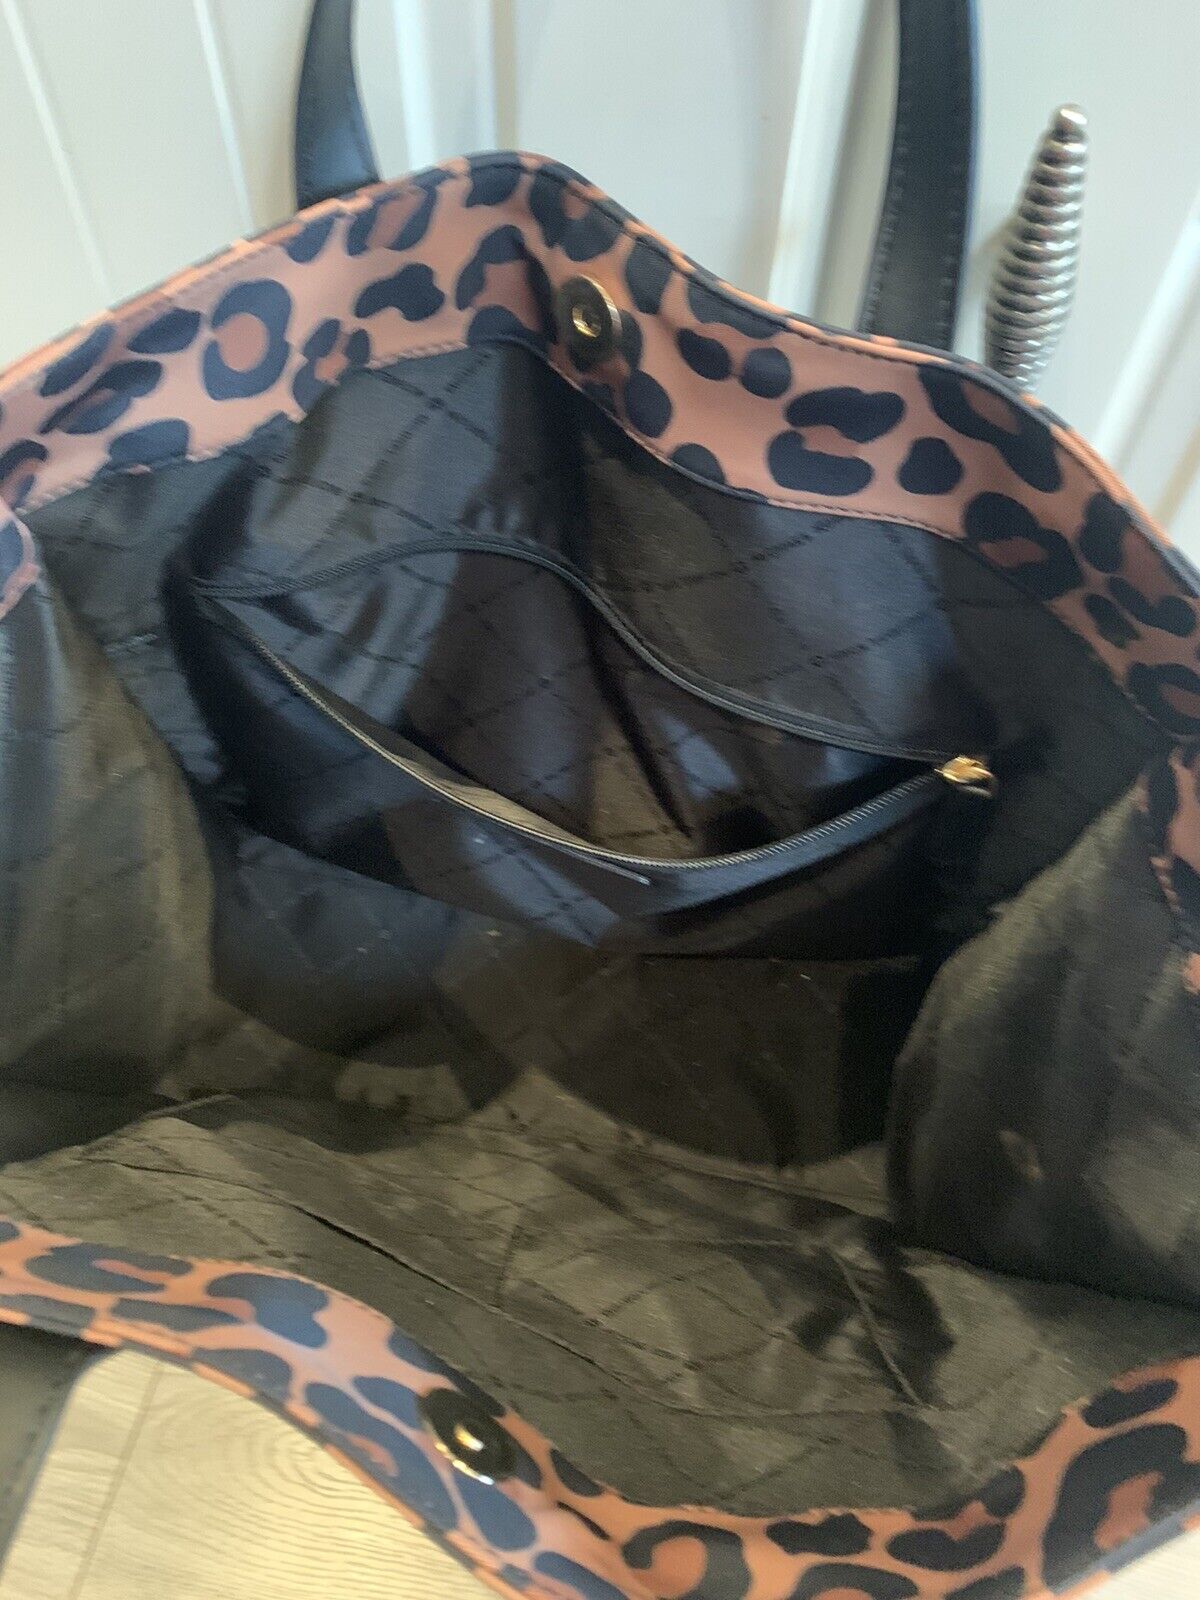 Michael Kors Carmen Small Gray Leather Leopard Haircalf Pouchette Handbag  Purse | eBay